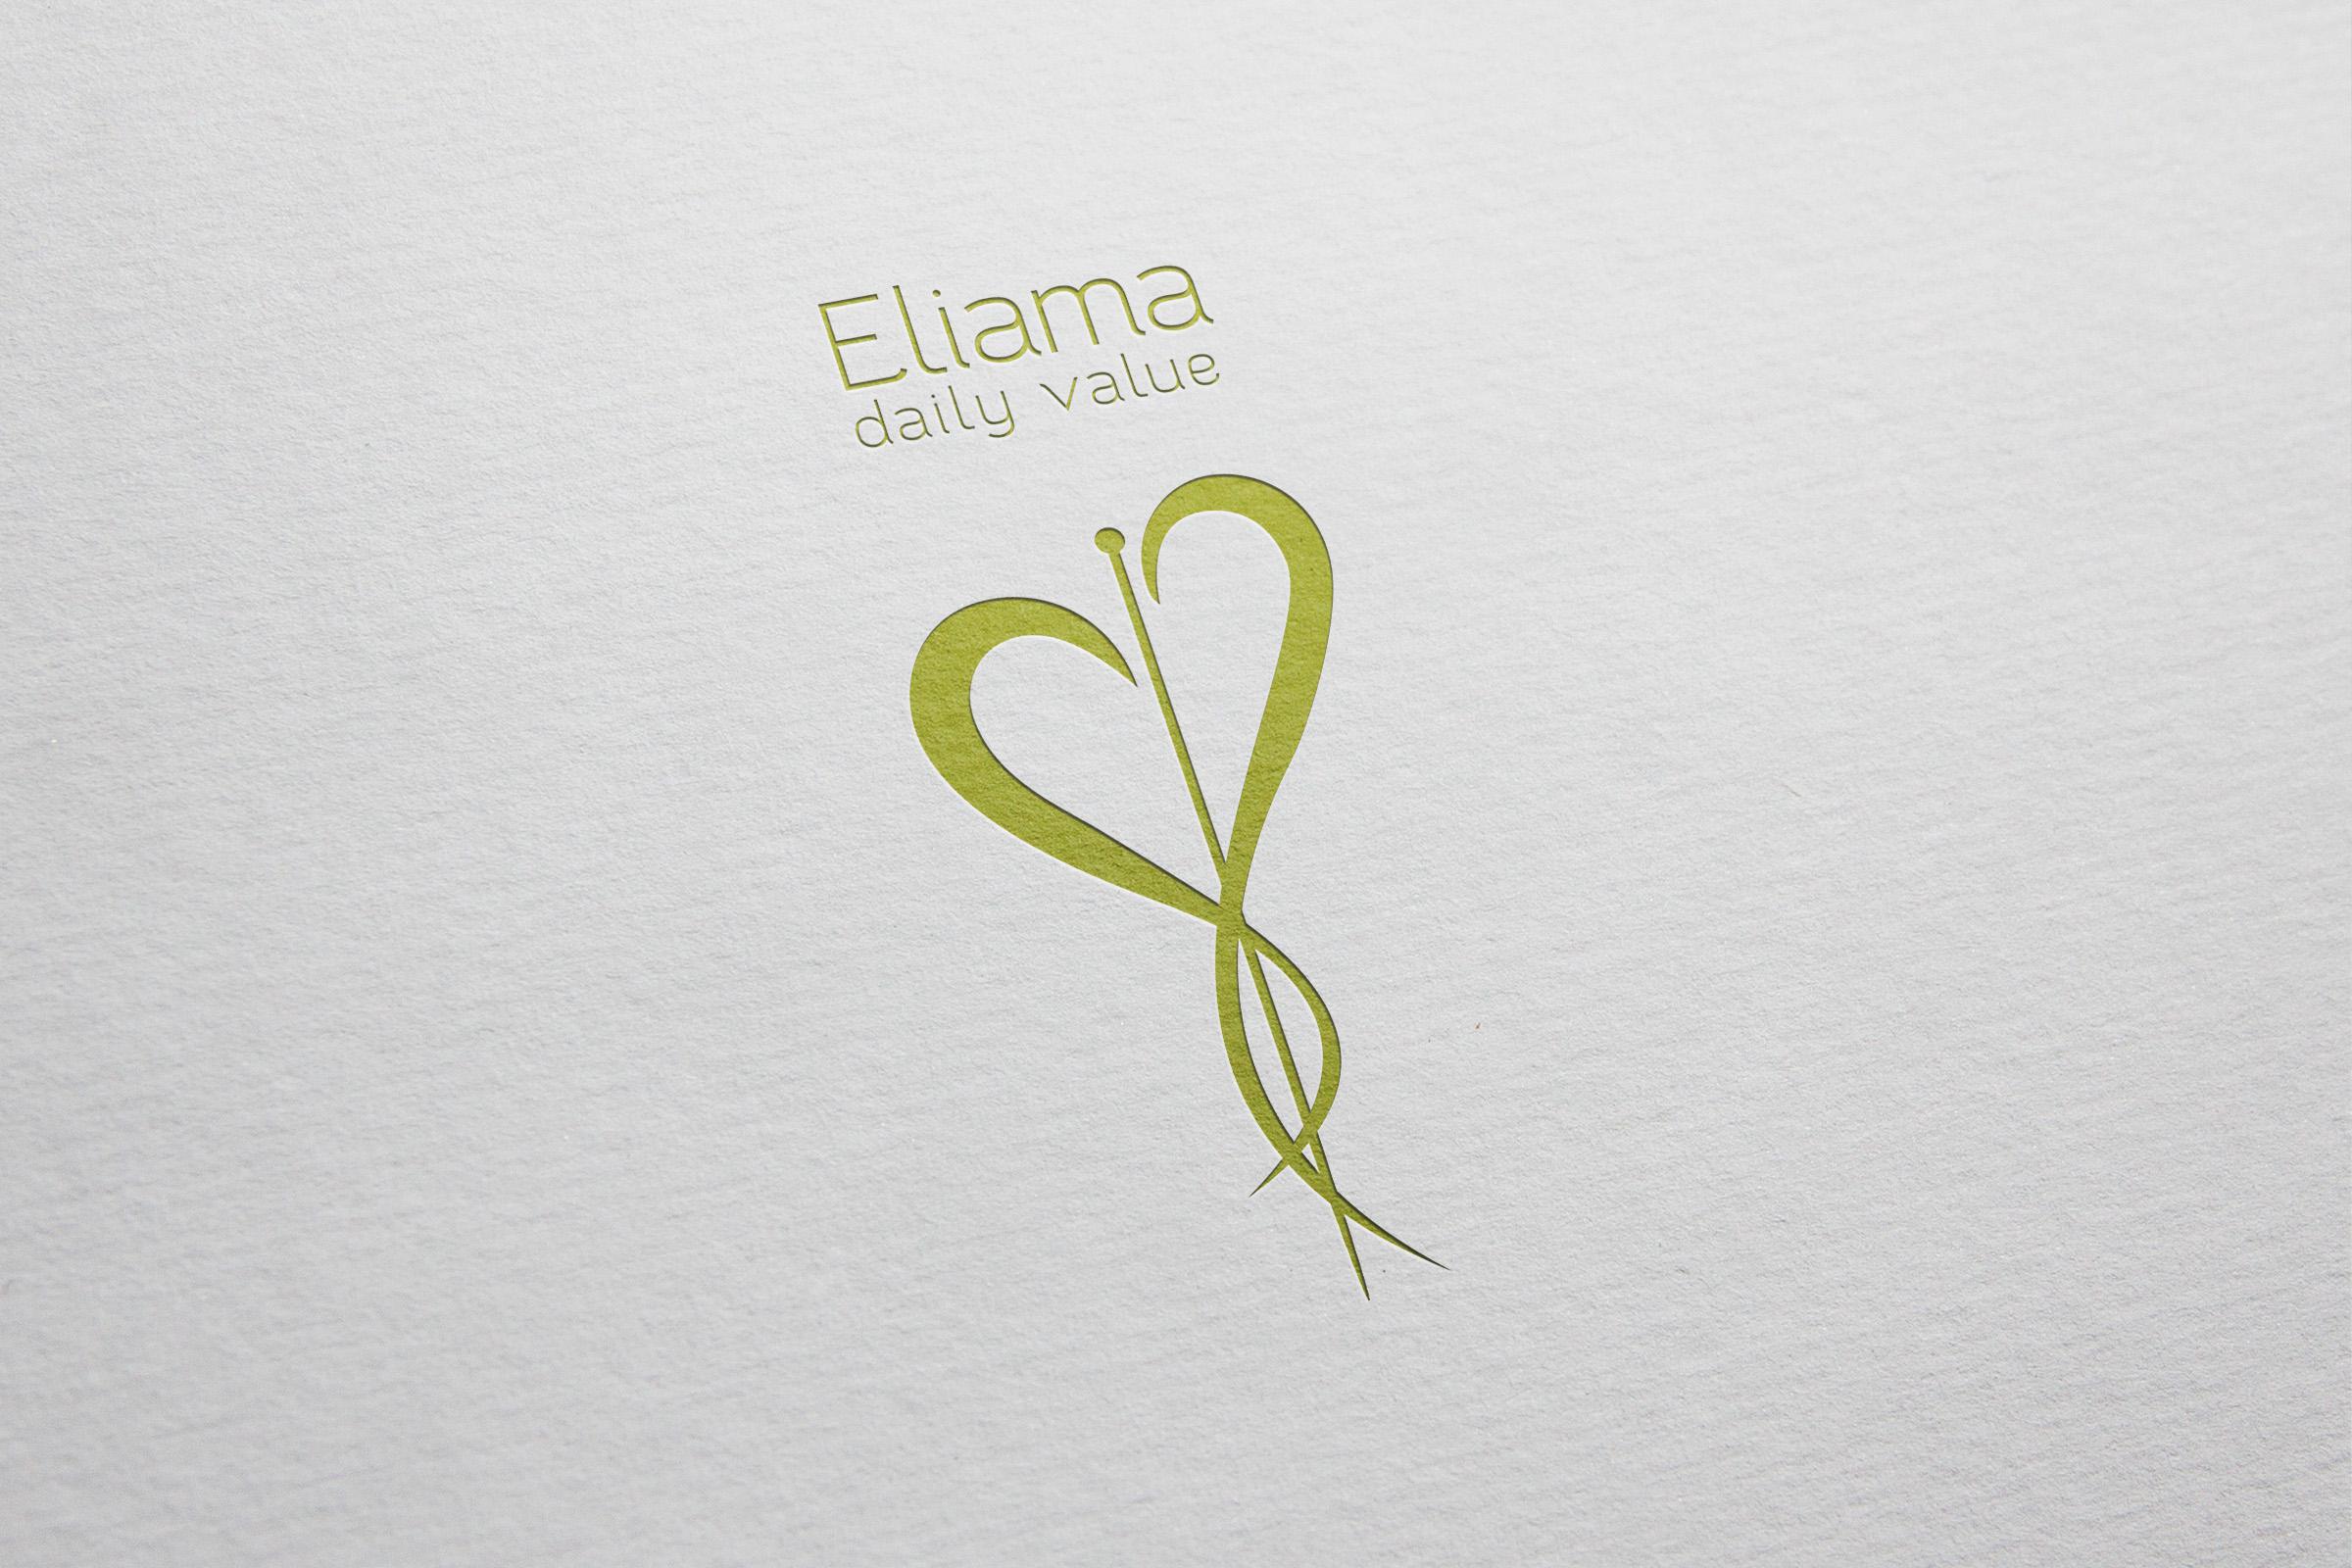 Eliama Daily Valye Olive Oil branding logo